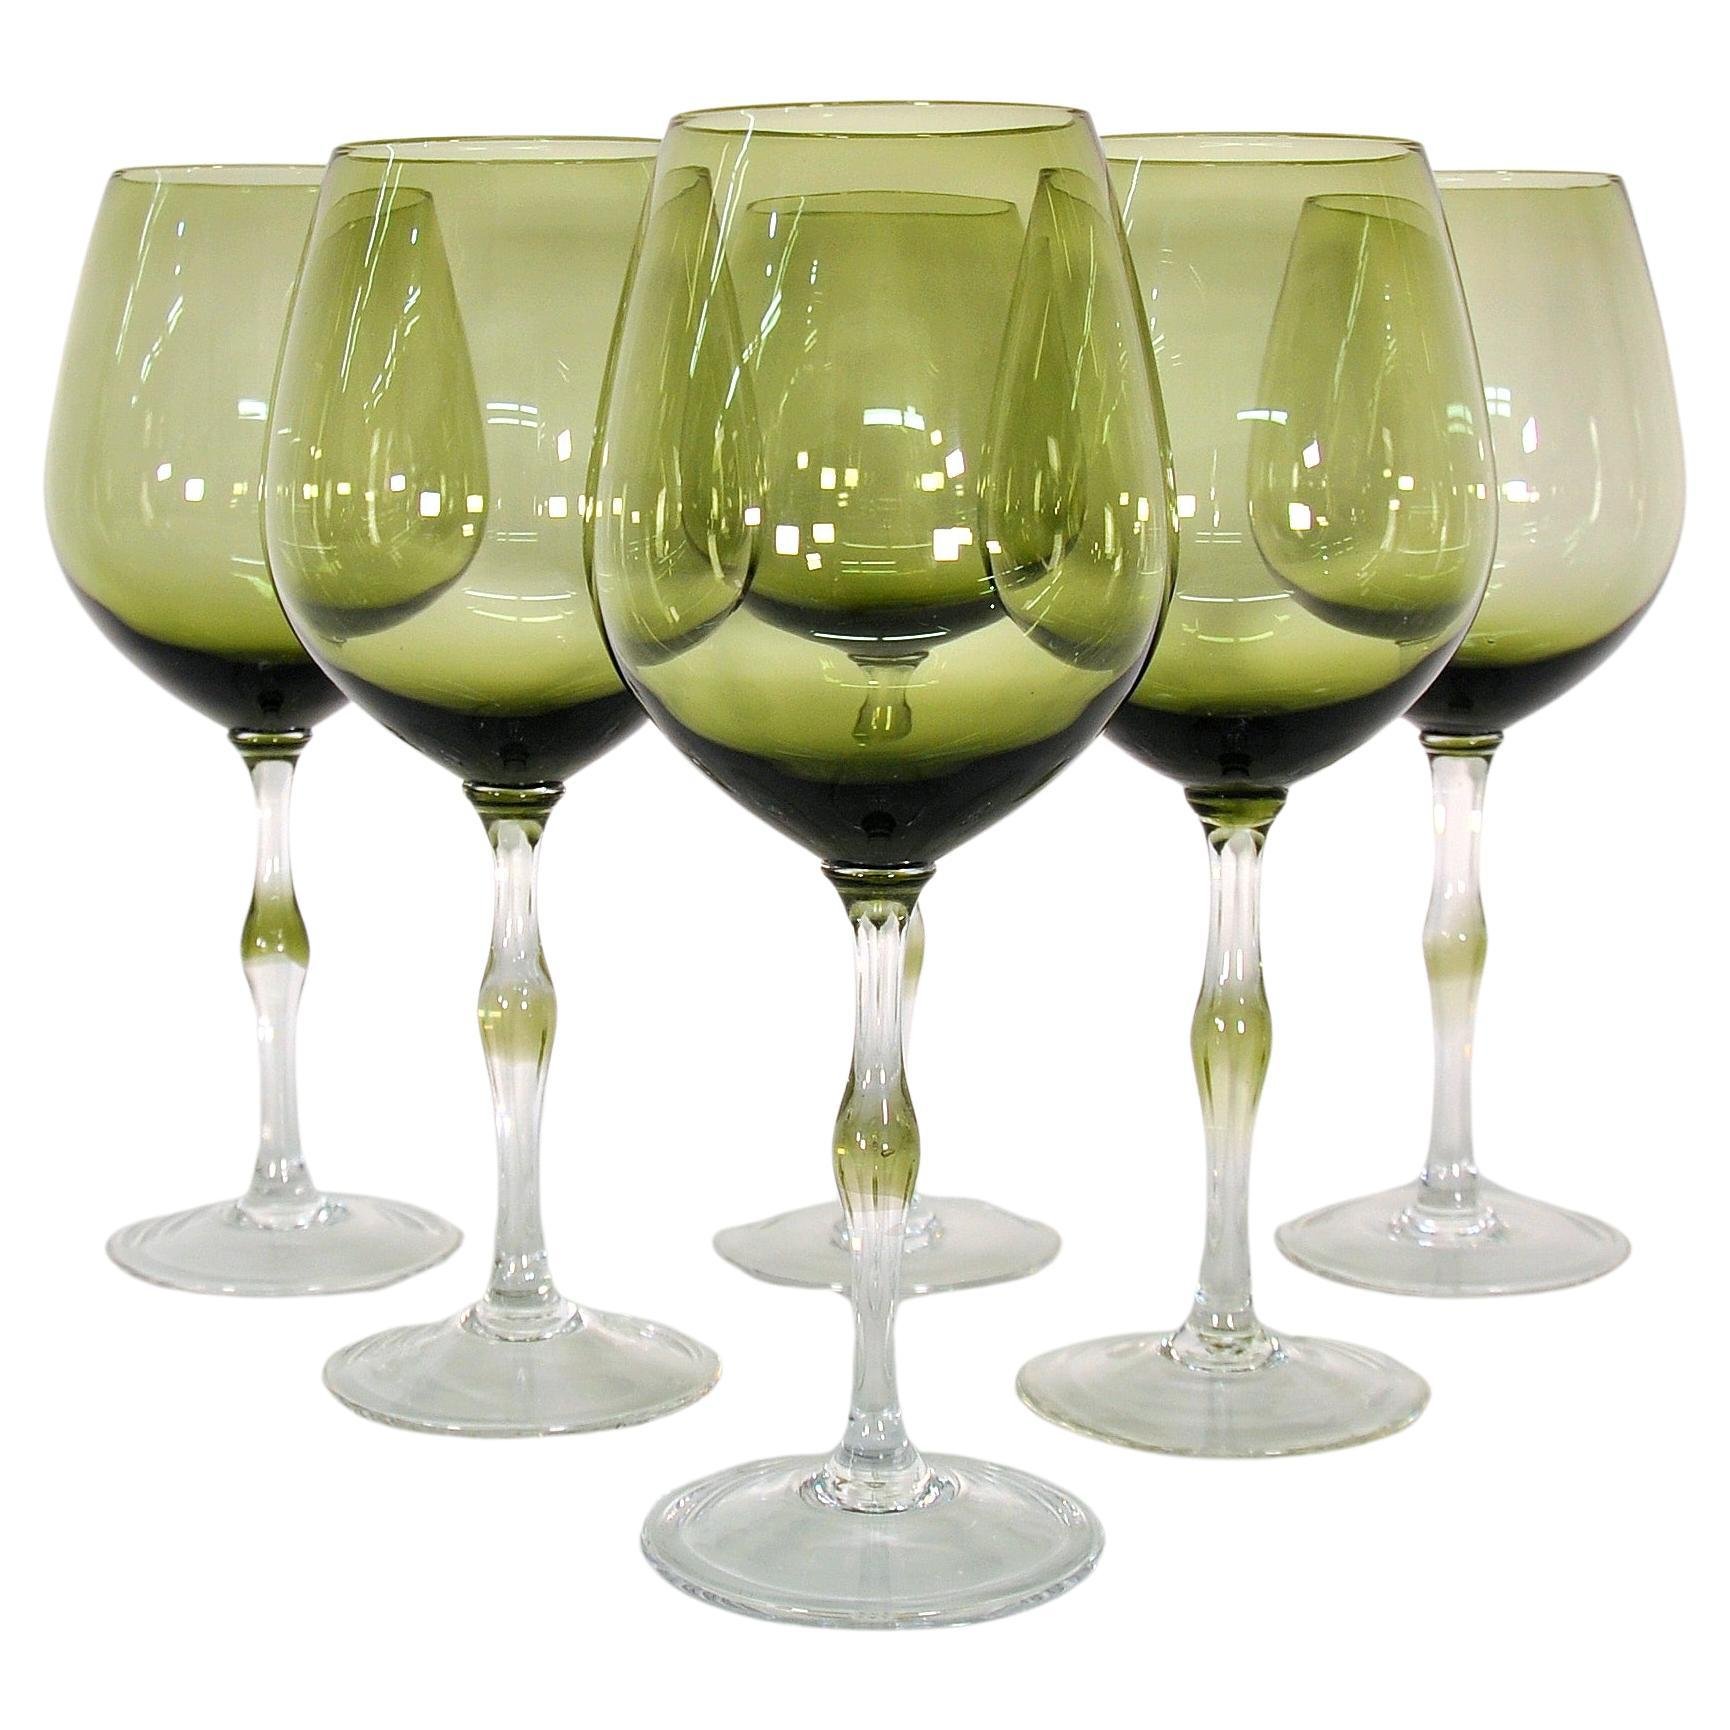 https://images.squarespace-cdn.com/content/v1/628d2996179c184bf054fc91/1687555766451-4A3JG2MZQHPDKN80N5MZ/Olive-Green-Italian-Hand-Blown-Wine-Glasses-1.jpeg